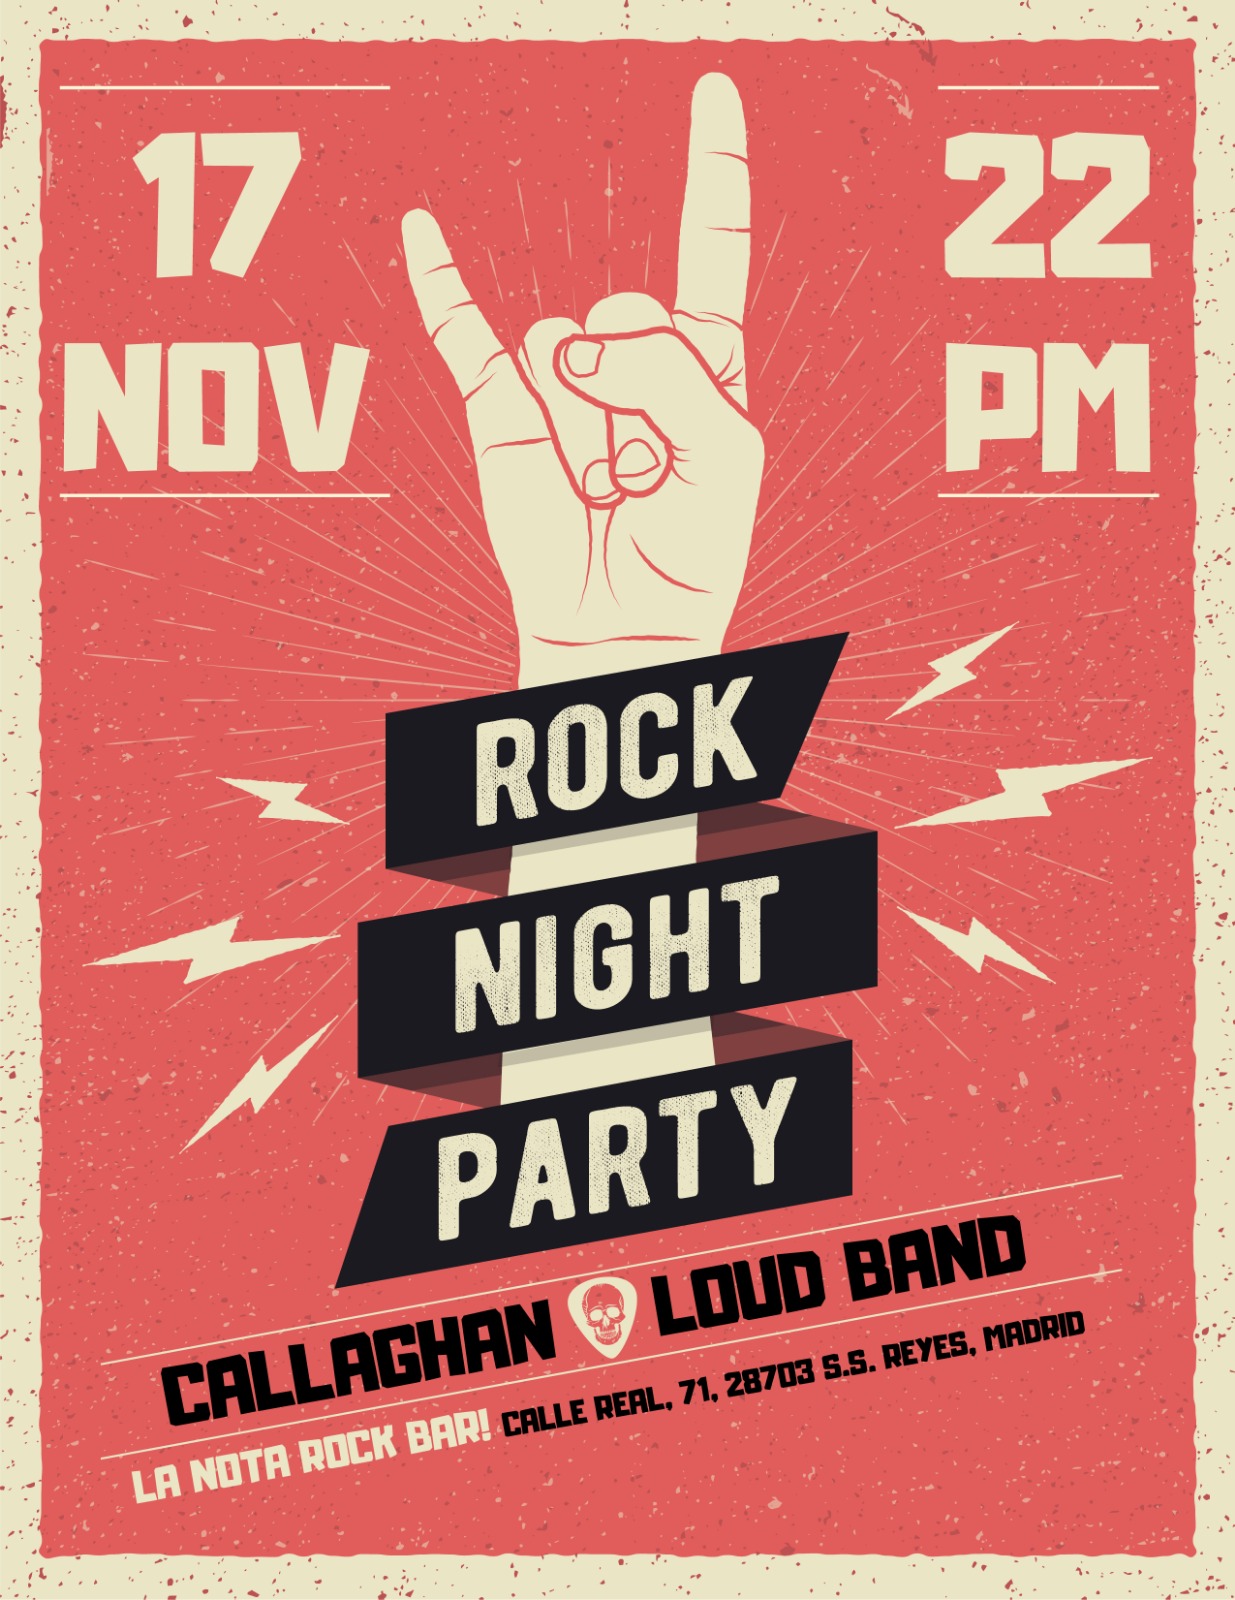 Cartel callaghan loud band ss de los reyes - rock and blog